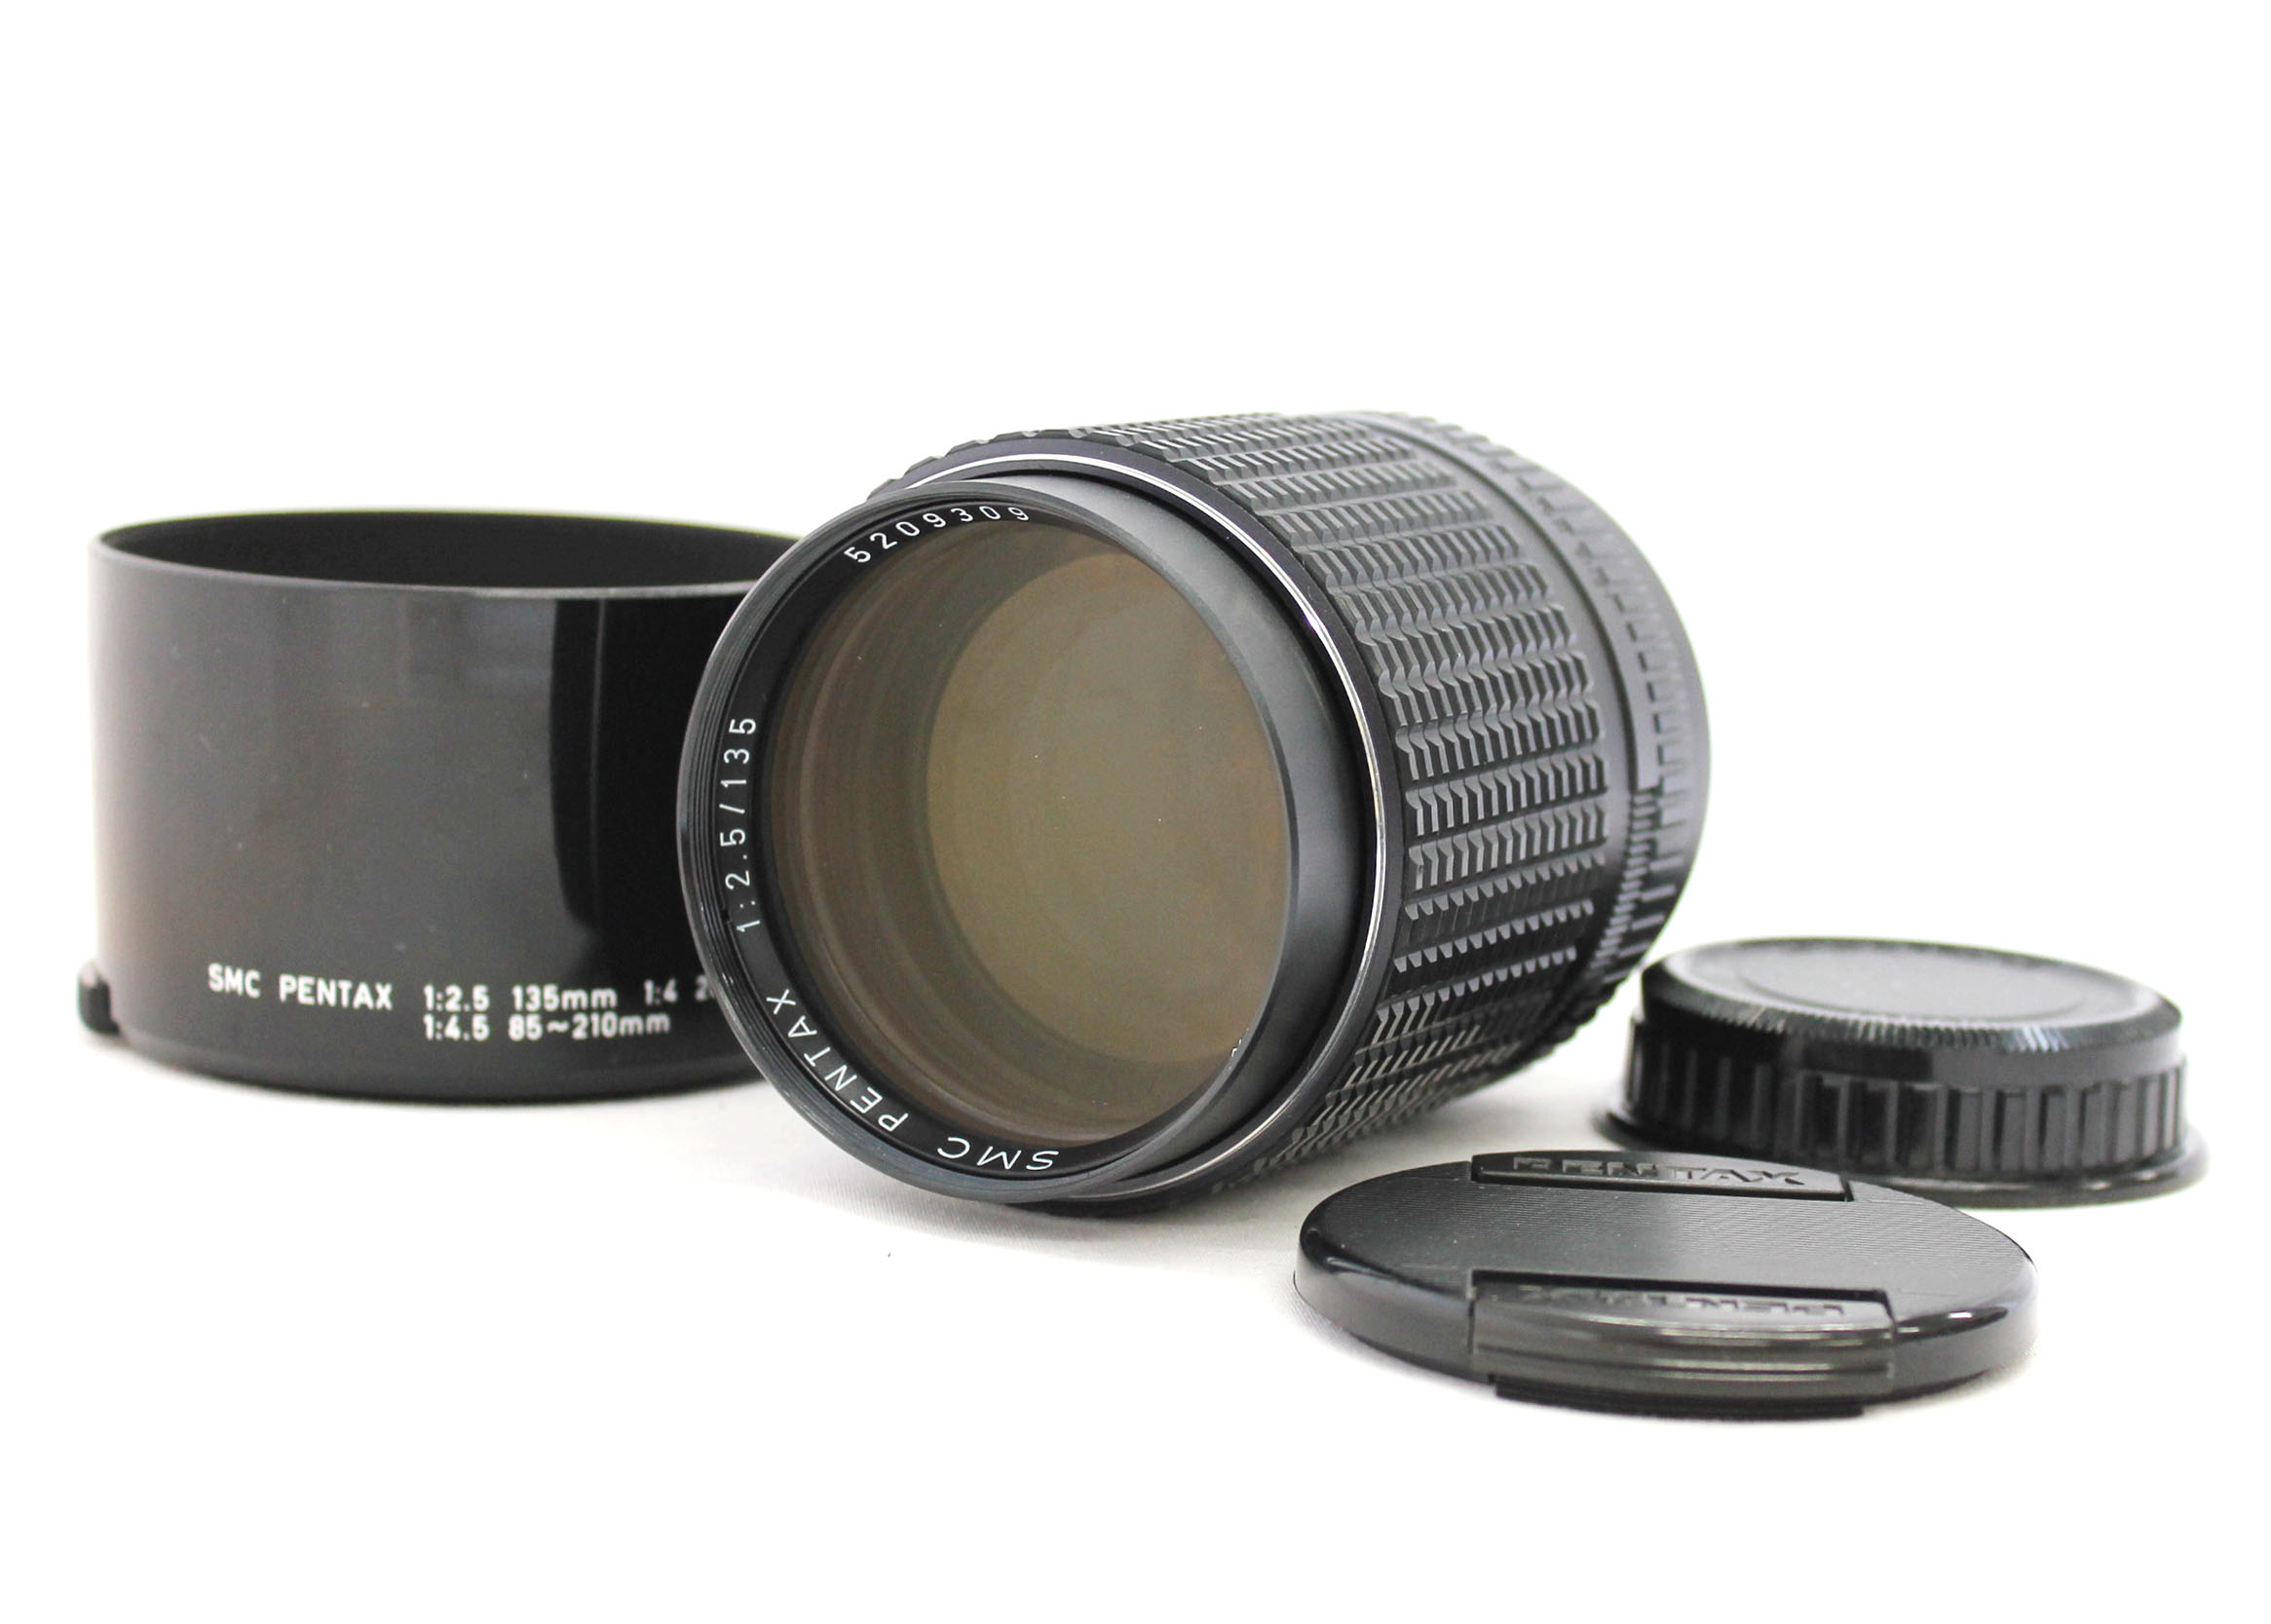 Japan Used Camera Shop | [Near Mint] Pentax SMC PENTAX 135mm F/2.5 MF K Mount Lens with Hood from Japan 